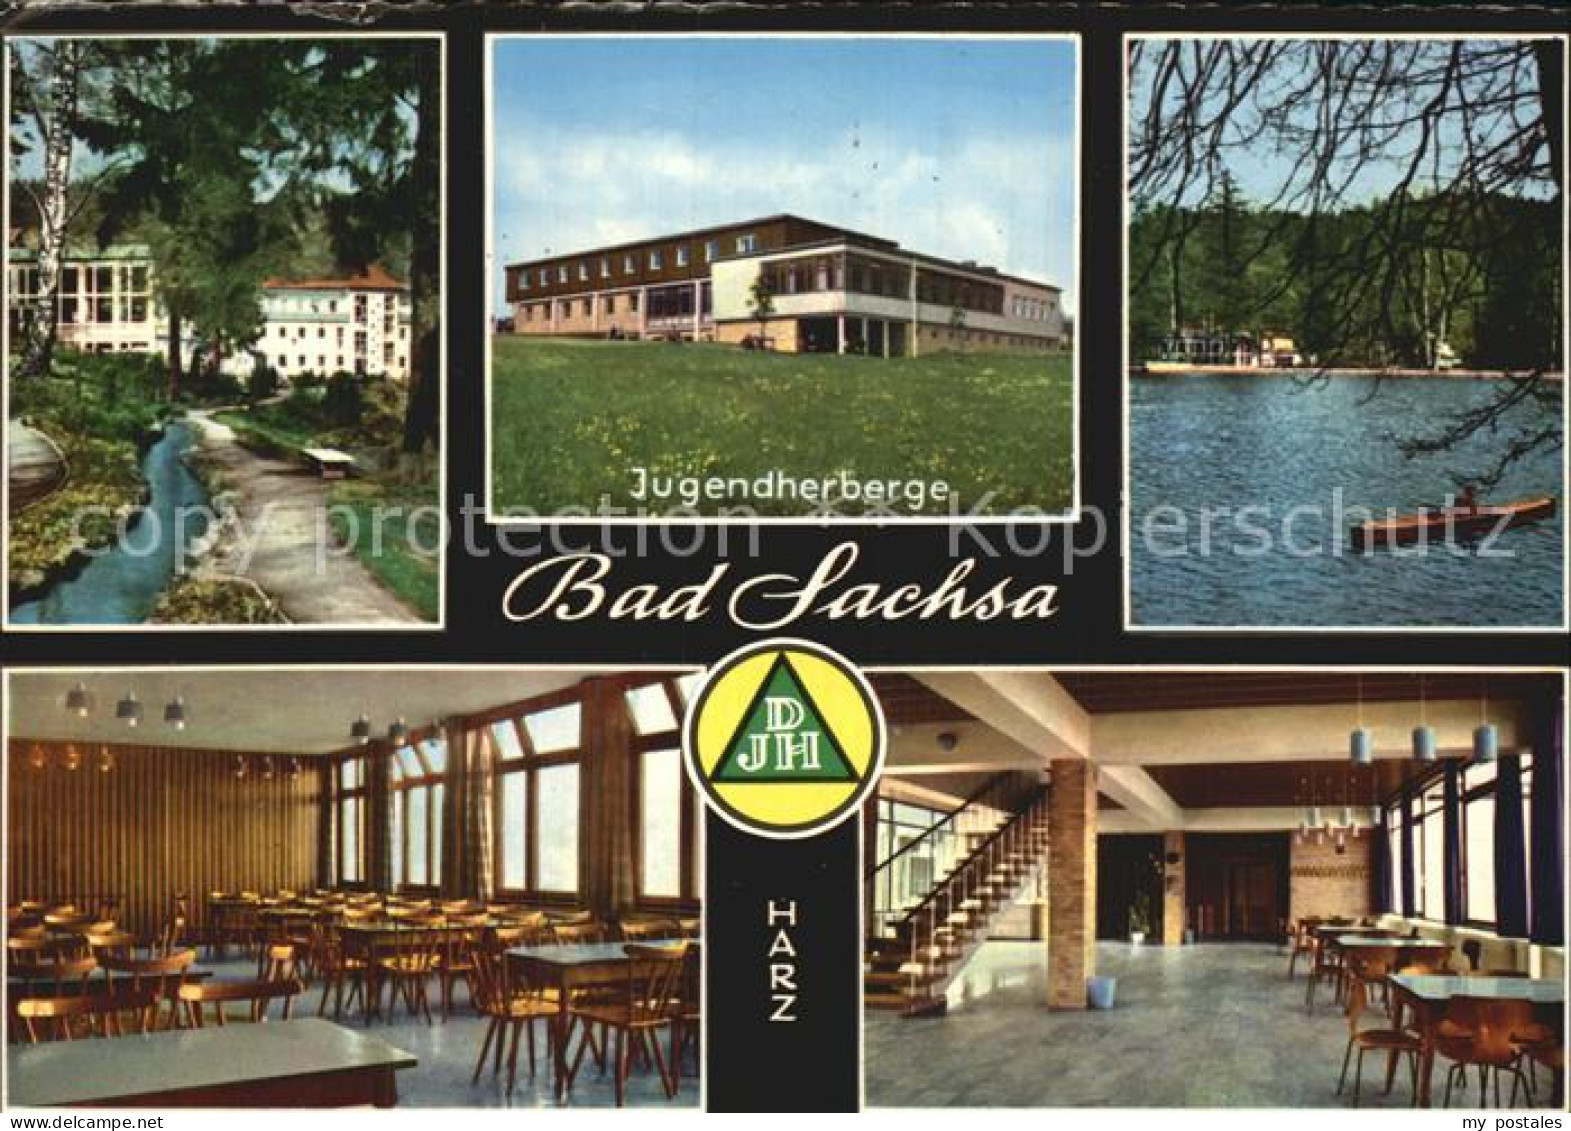 72504175 Bad Sachsa Harz Jugendherberge
See Speiseraum  Bad Sachsa - Bad Sachsa